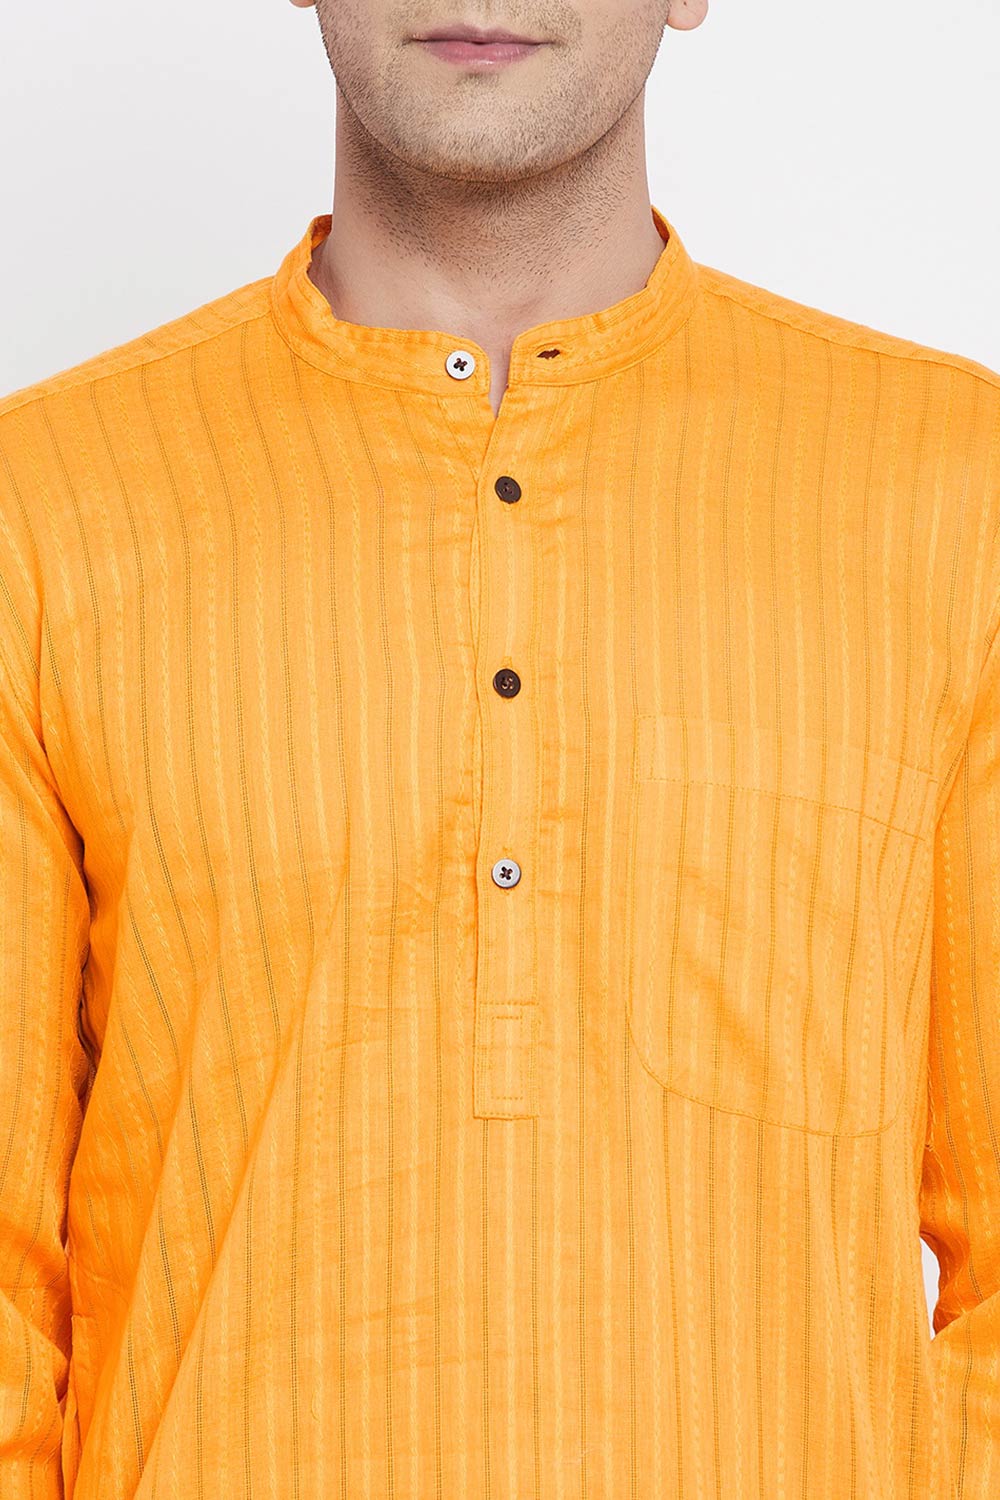 Buy Men's Pure Cotton Stripe Printed Sherwani Kurta in Light Yellow - Zoom Out